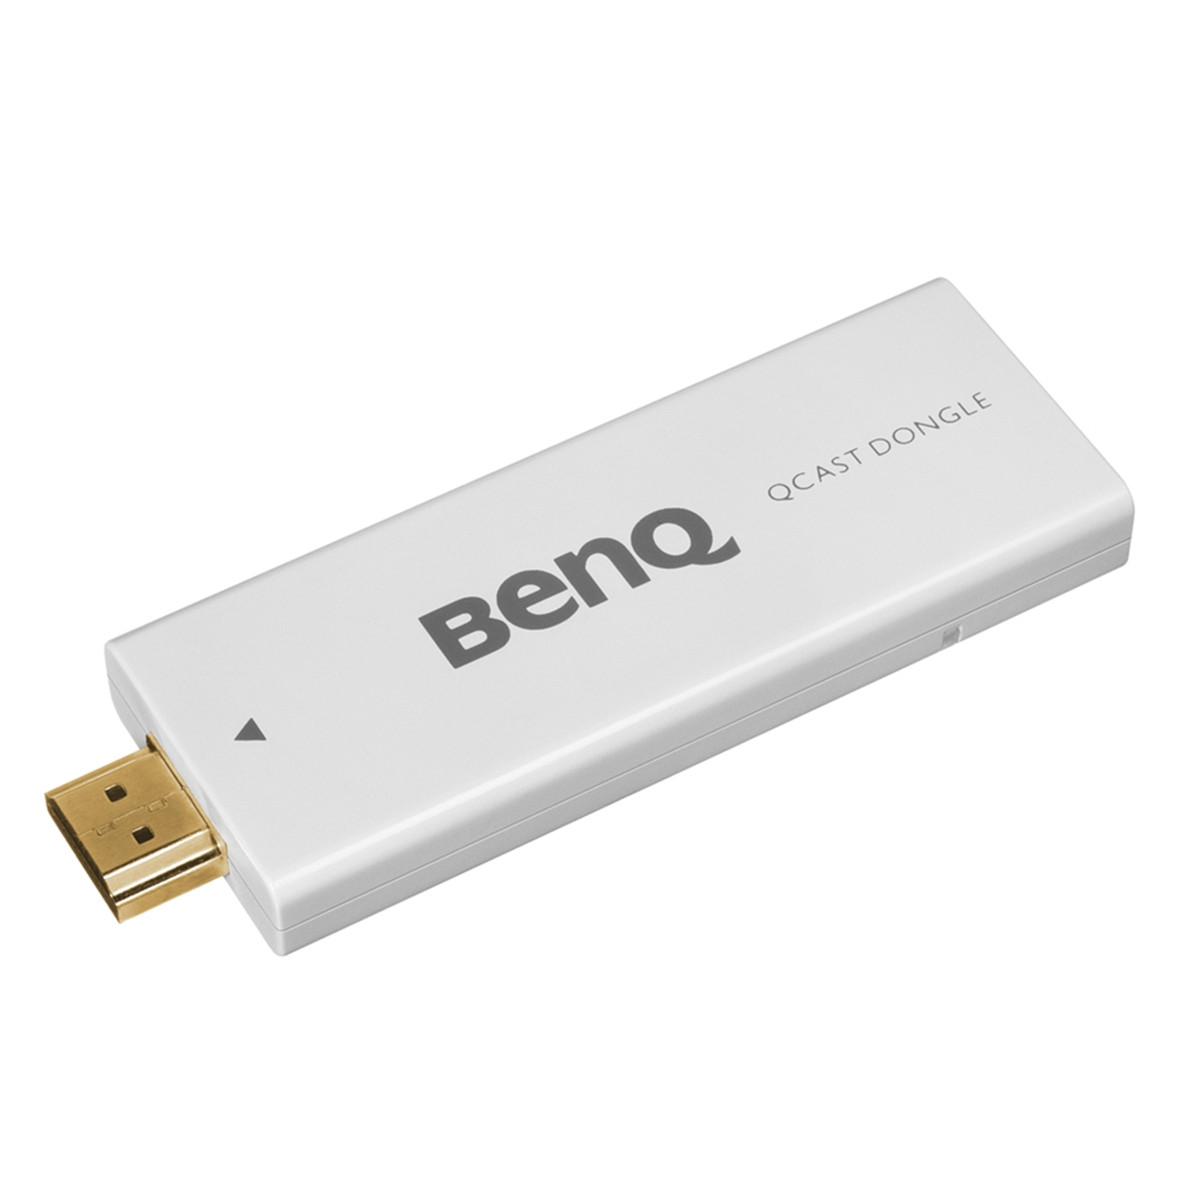 Adaptador Wireless para Projetor Benq QP01 | Dongle Qcast